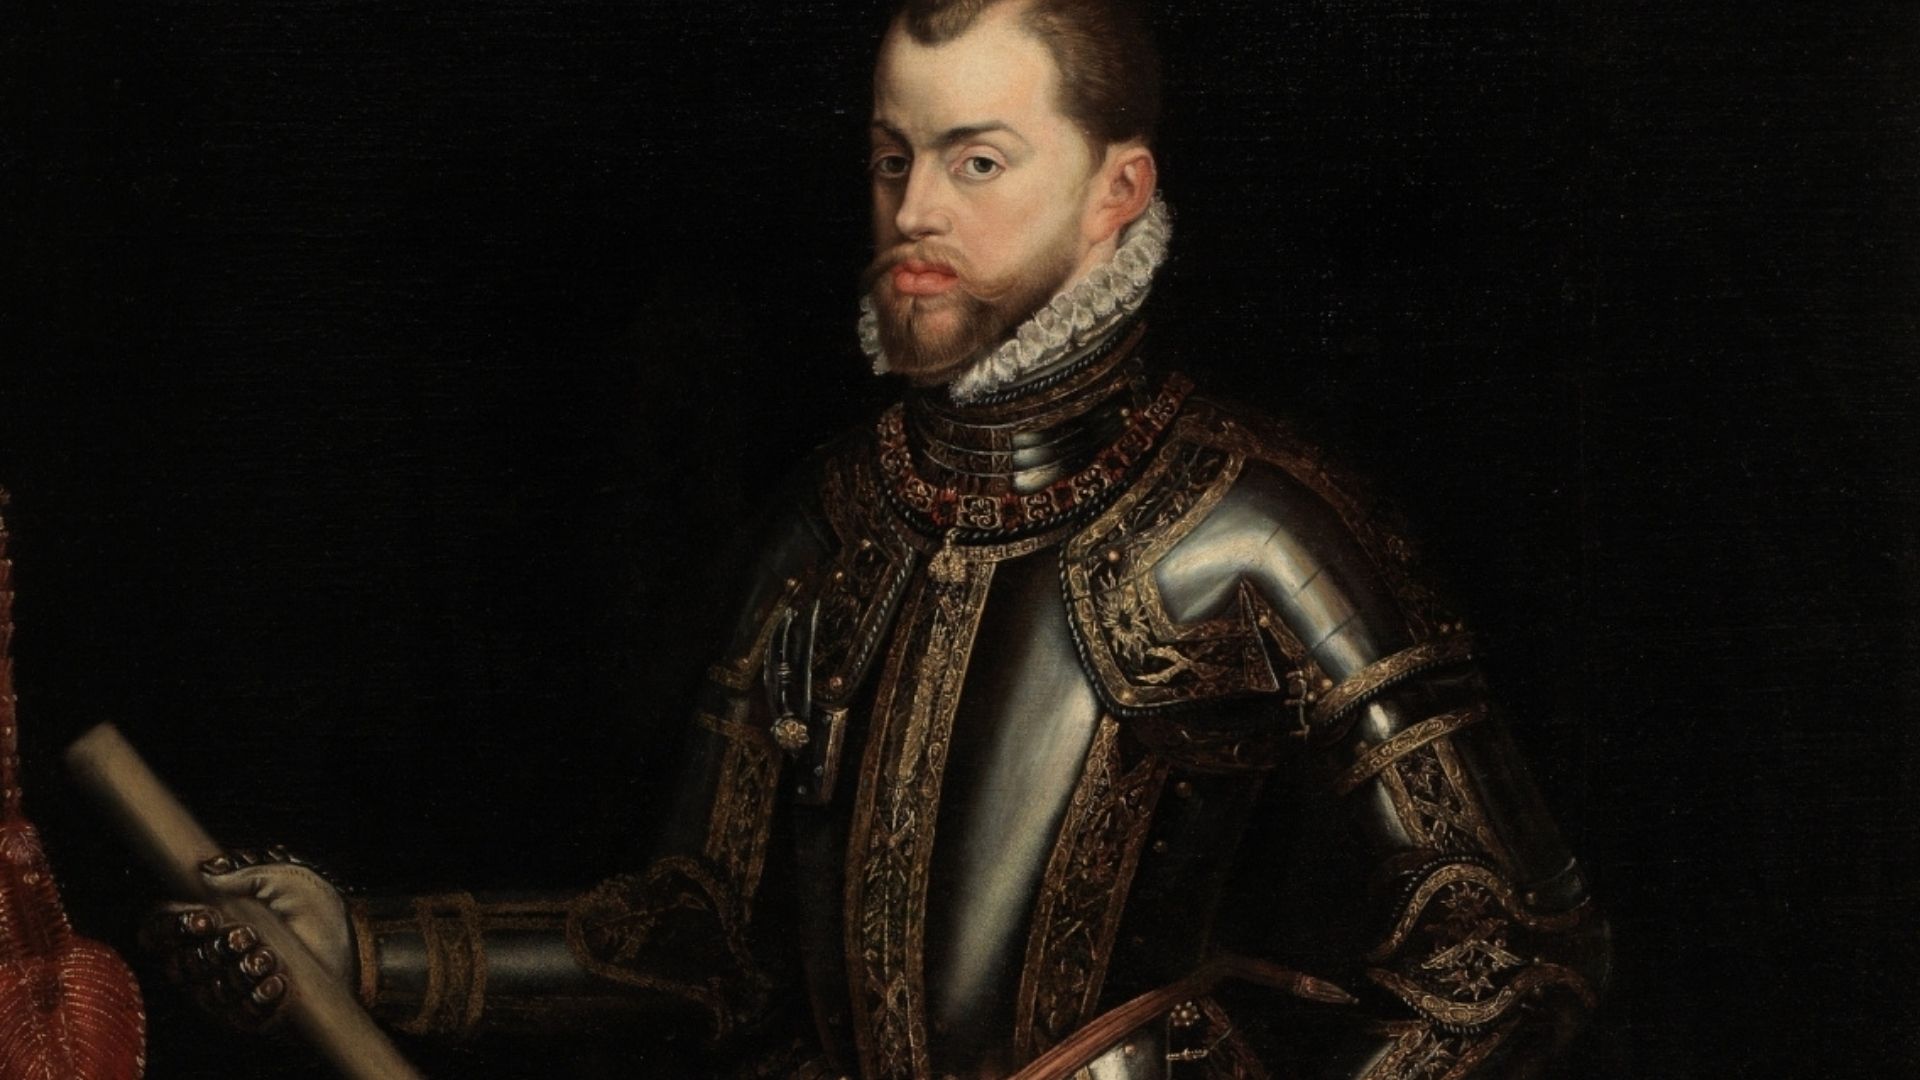 Retrato del Rey Felipe II